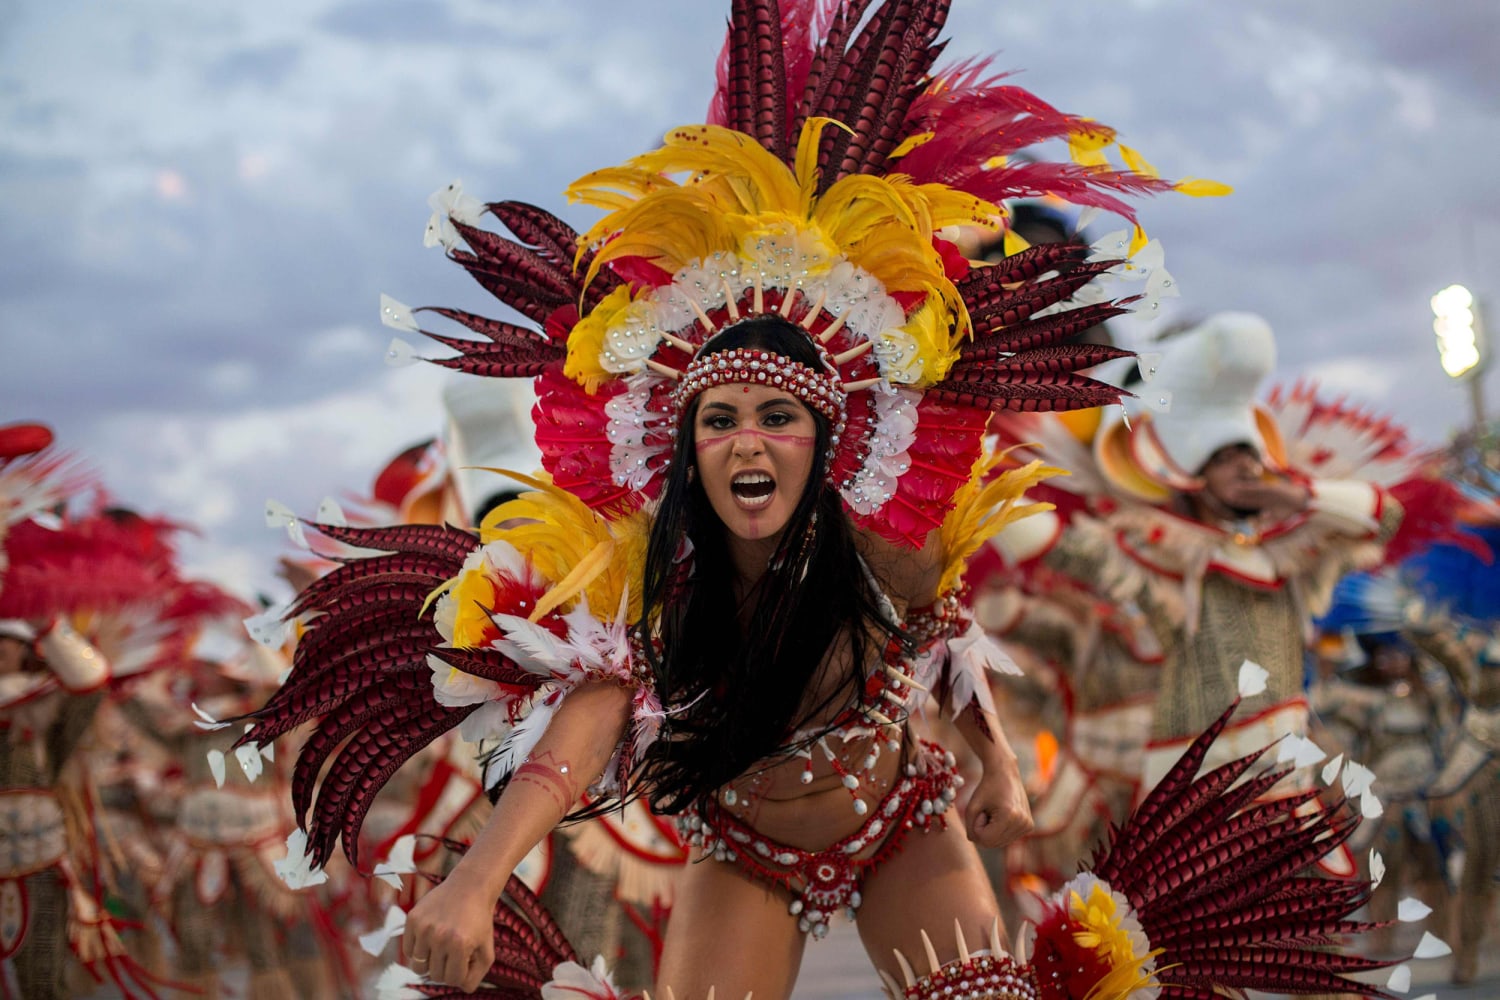 Spirit Of Samba Carnival Sets Rio Alight As Dancers Take To The Sambadrome